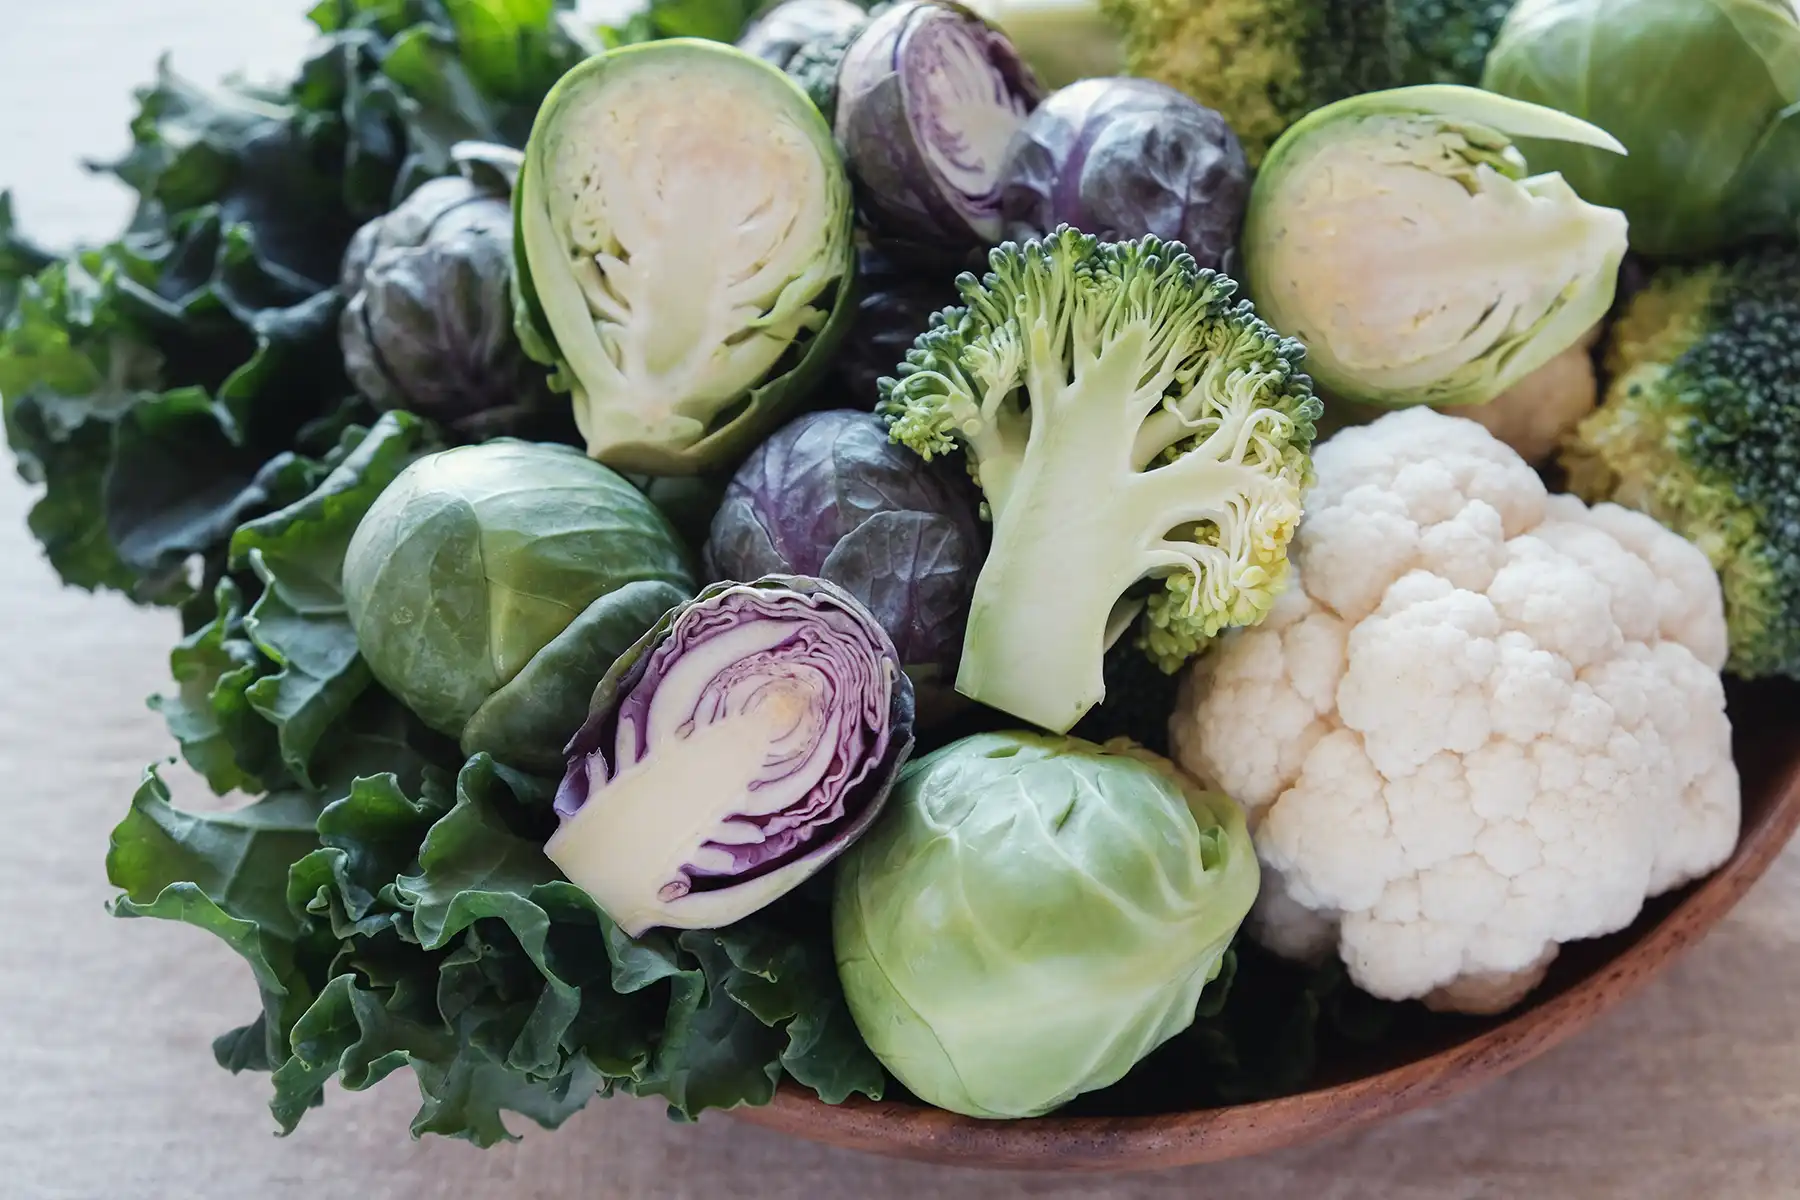 Cruciferous vegetables like brussels sprouts, broccoli, cauliflower, etc.